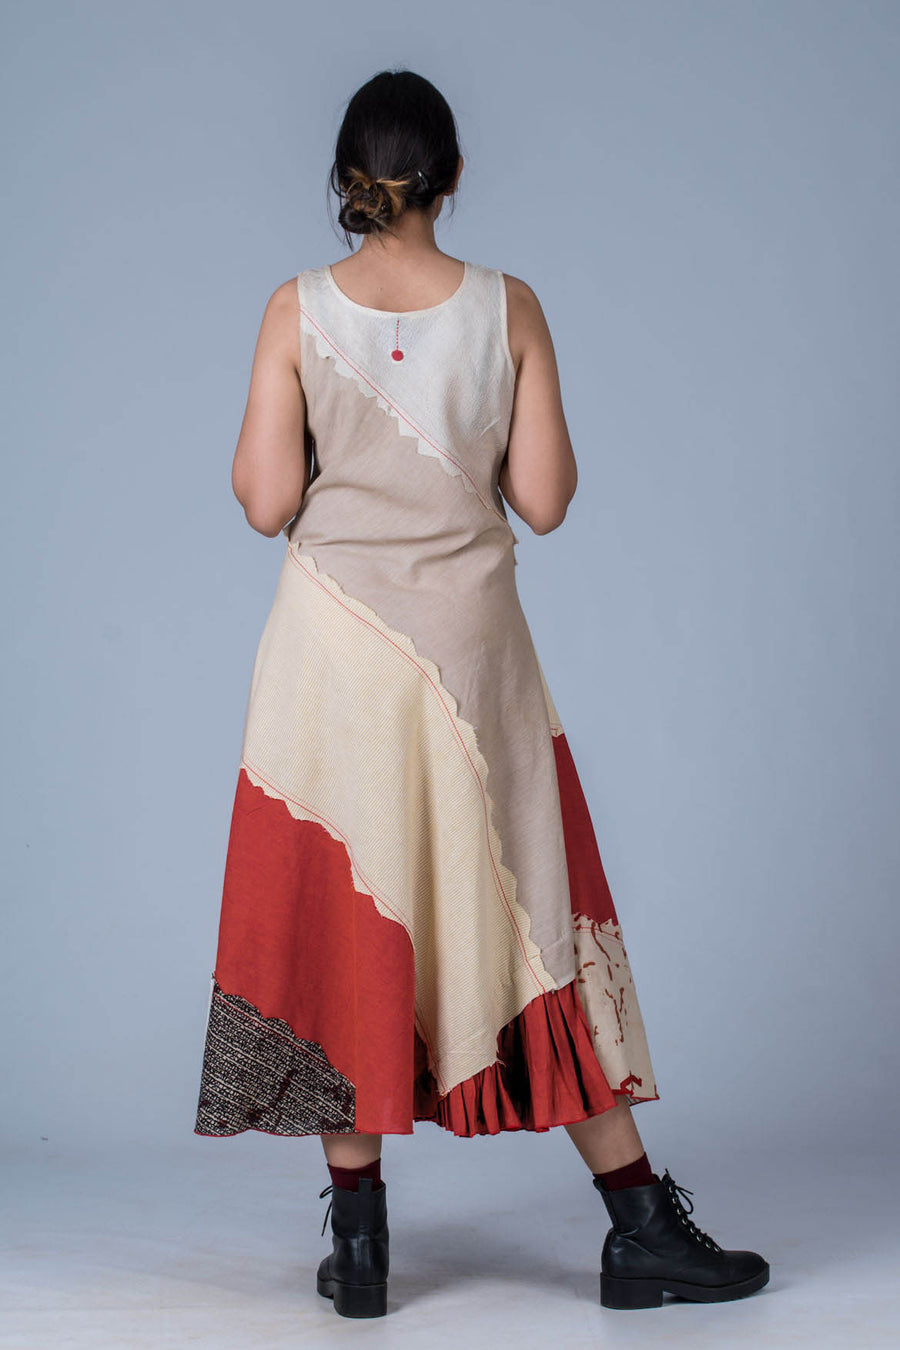 Off White Upcycled Dress - AARNAVI - Upasana Design Studio